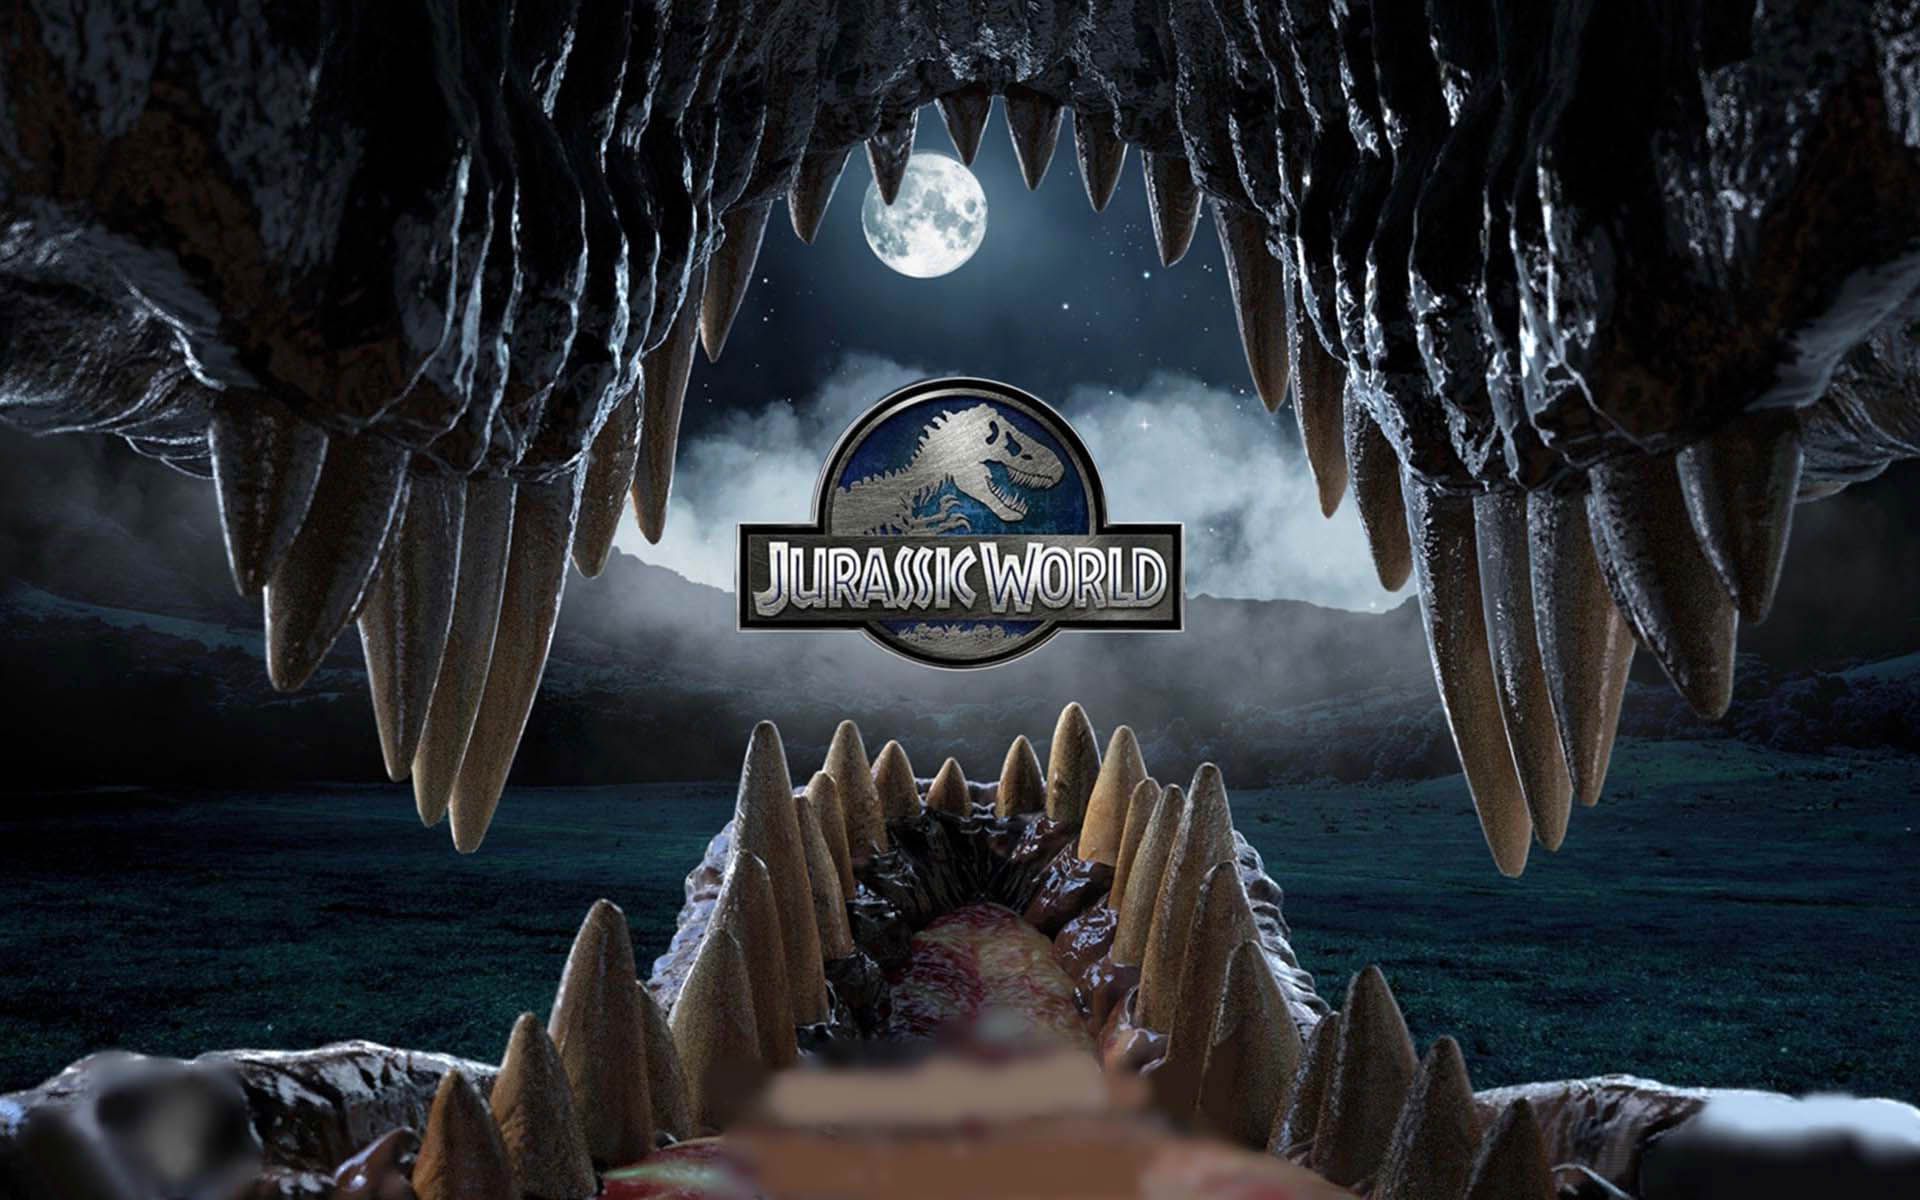 Jurassic Park T-rex Pictures for Desktop Wallpaper - Jurassic World